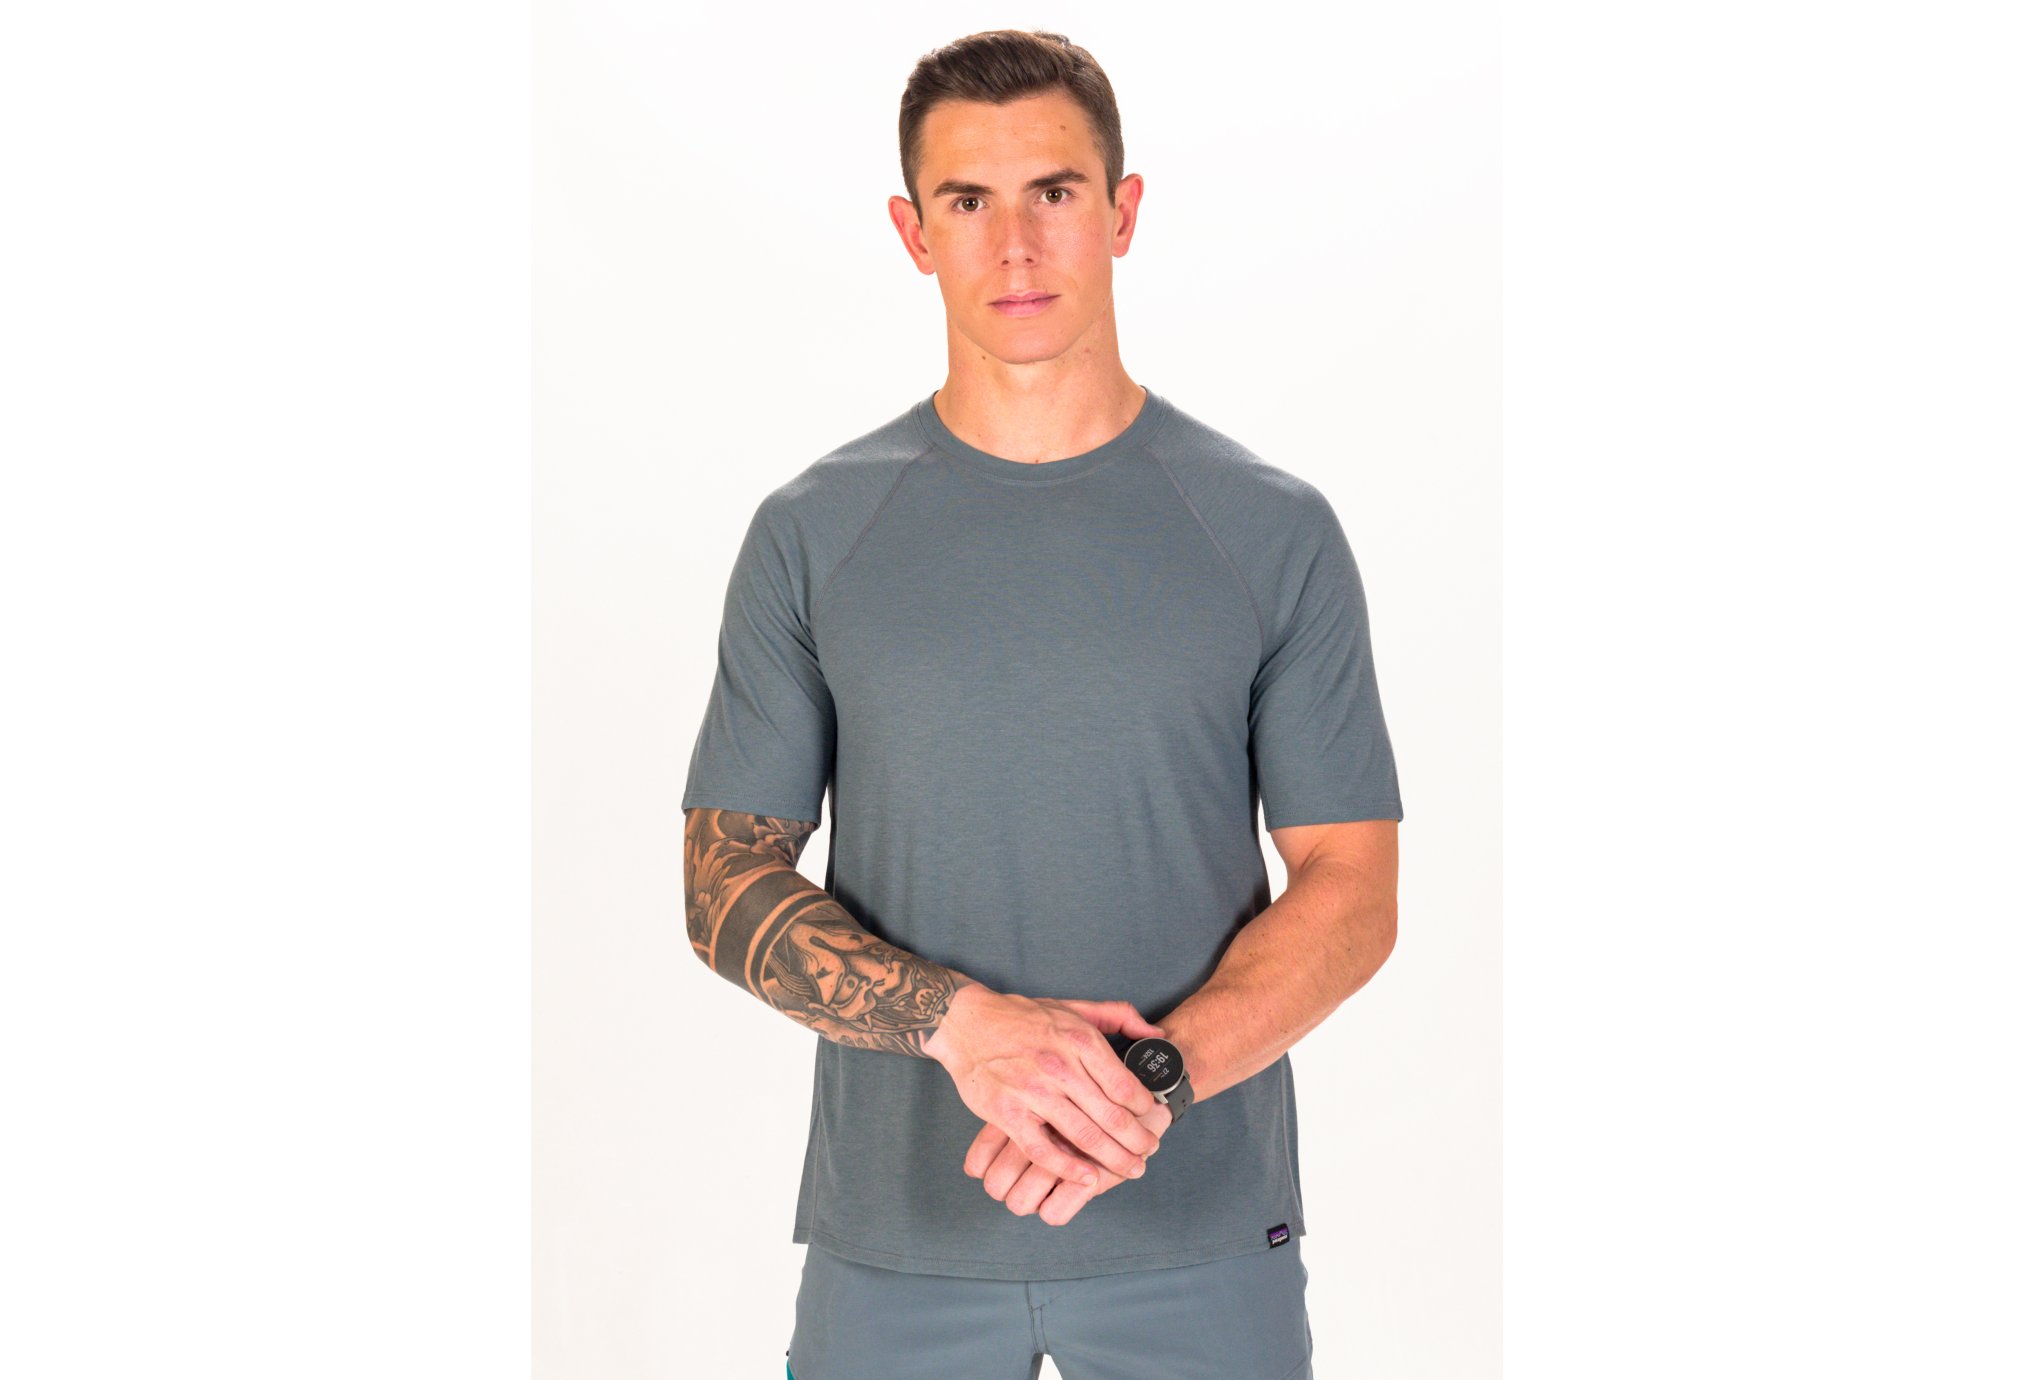 Hommes Fitness Sports O-cou Stretch Top à séchage rapide T-shirt